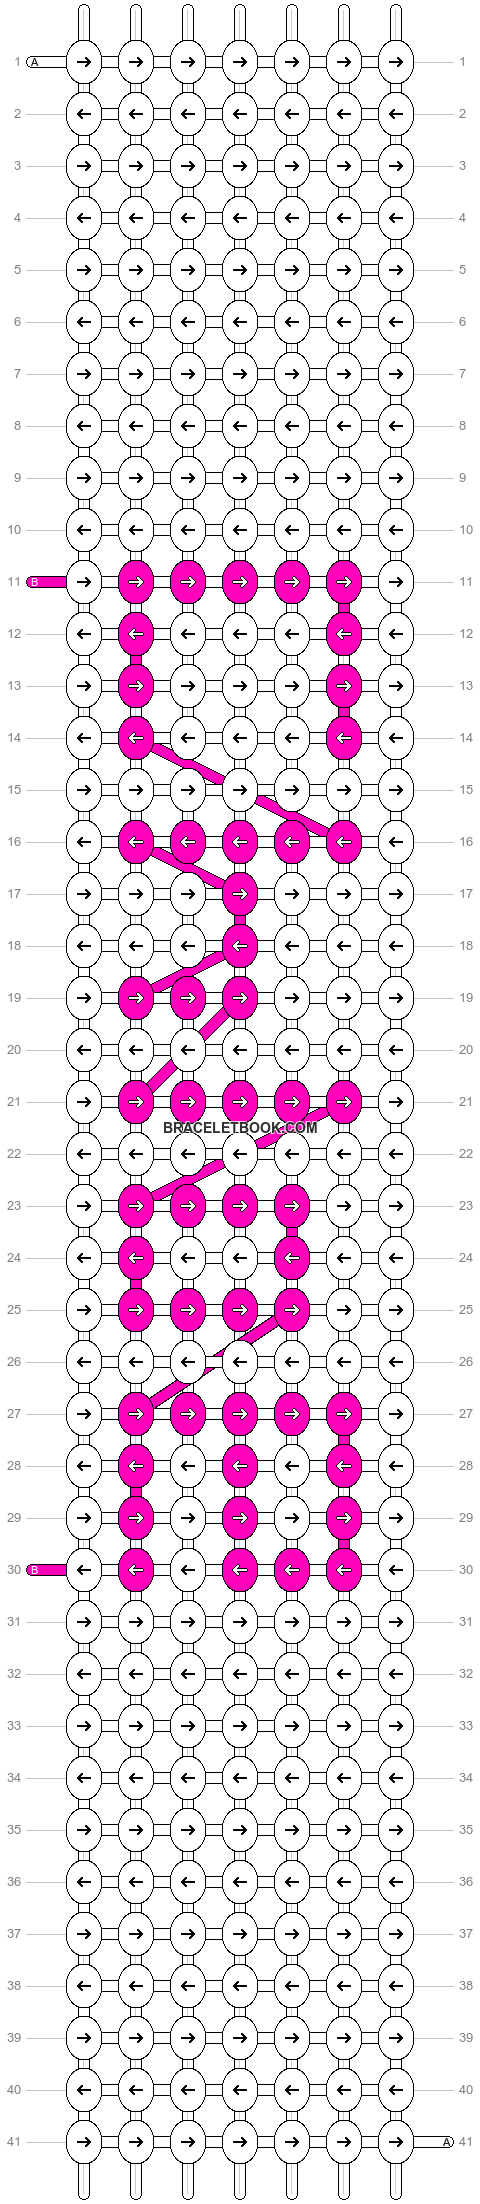 Alpha pattern #4487 pattern